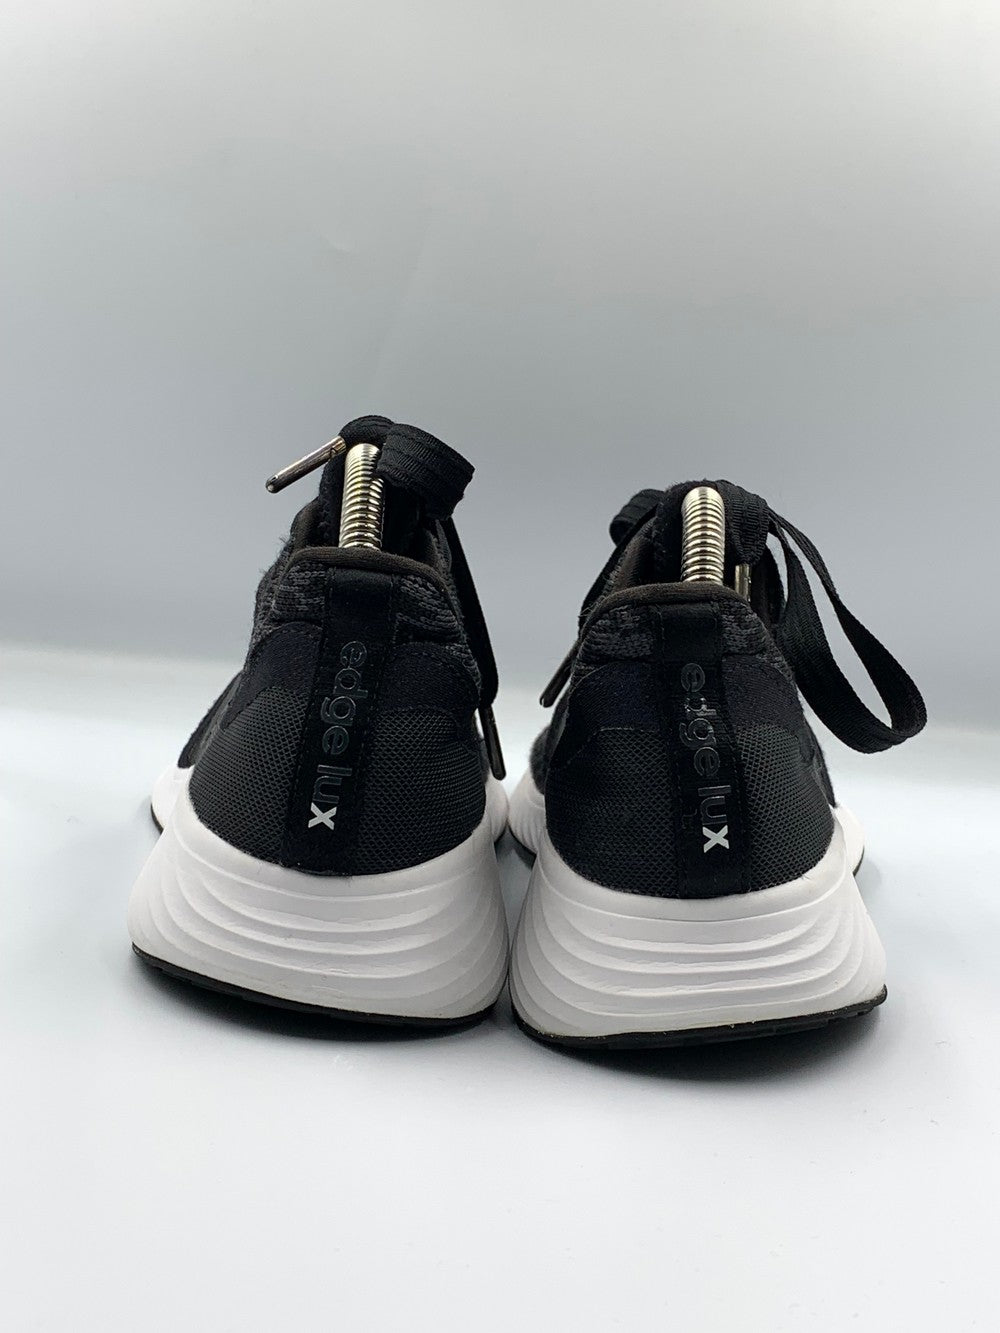 Edge Lux Original Brand Sports Black  Running For Women Shoes